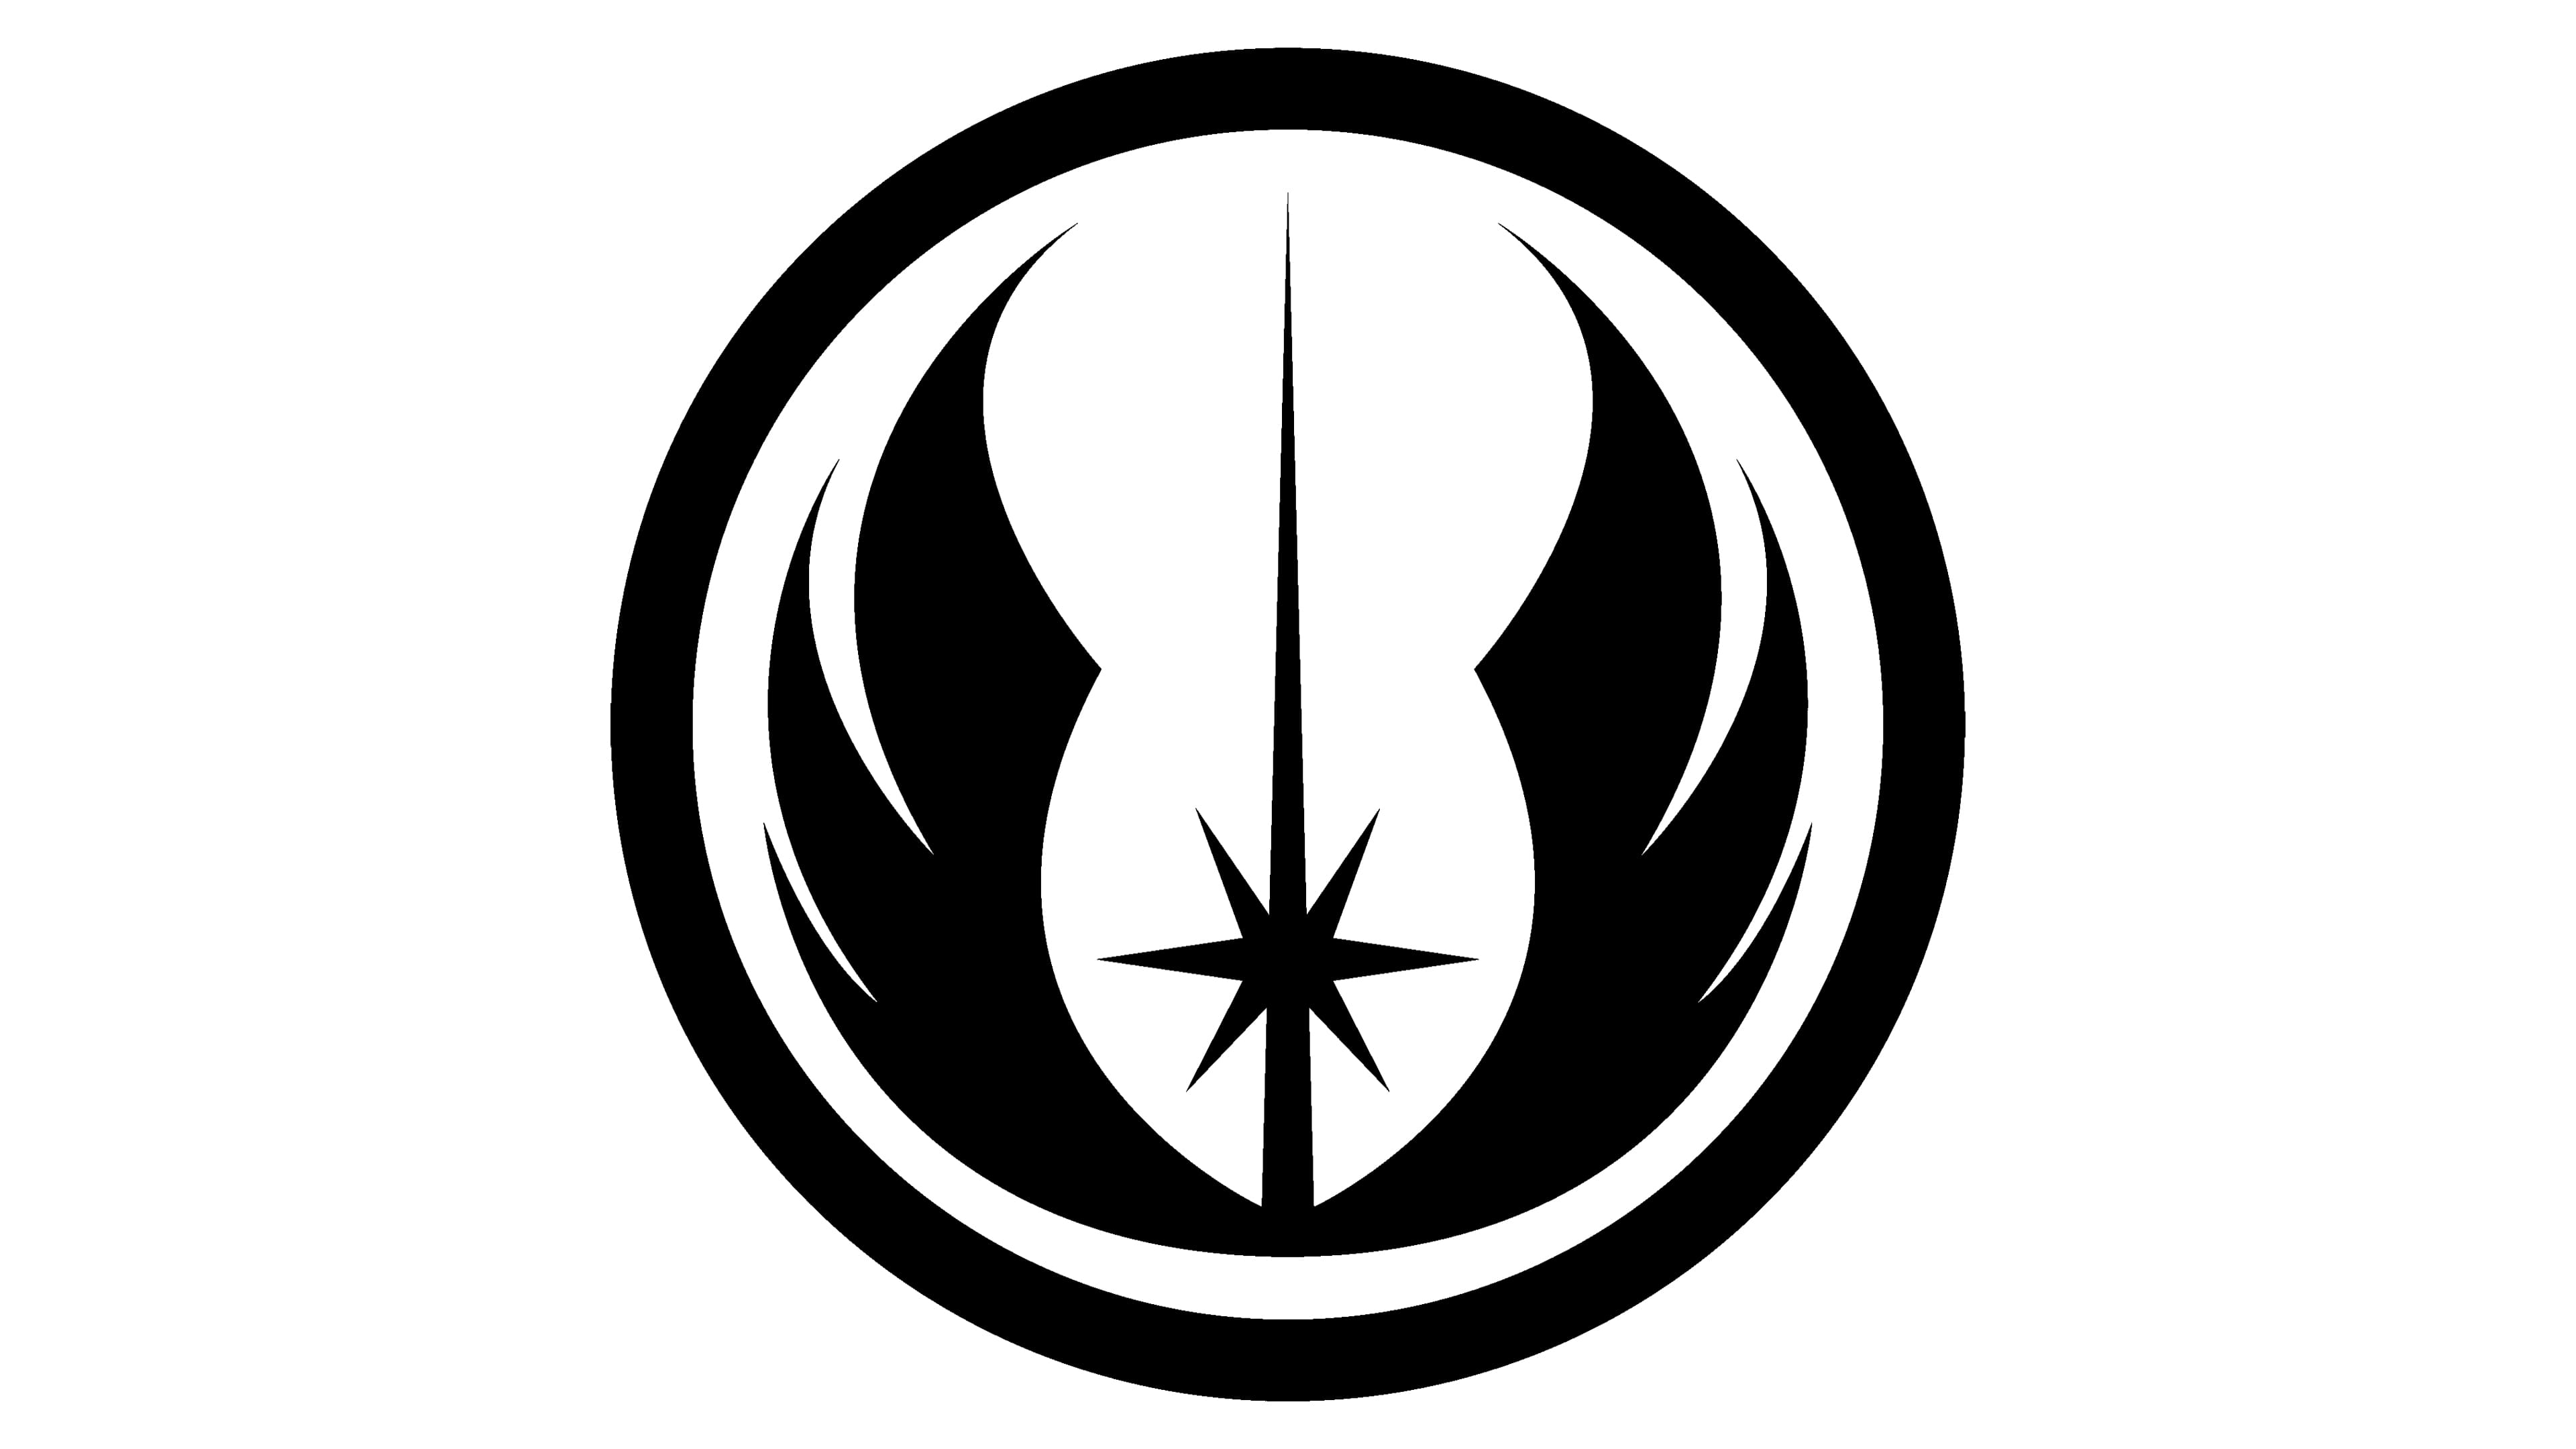 Jedi symbol in black, no background